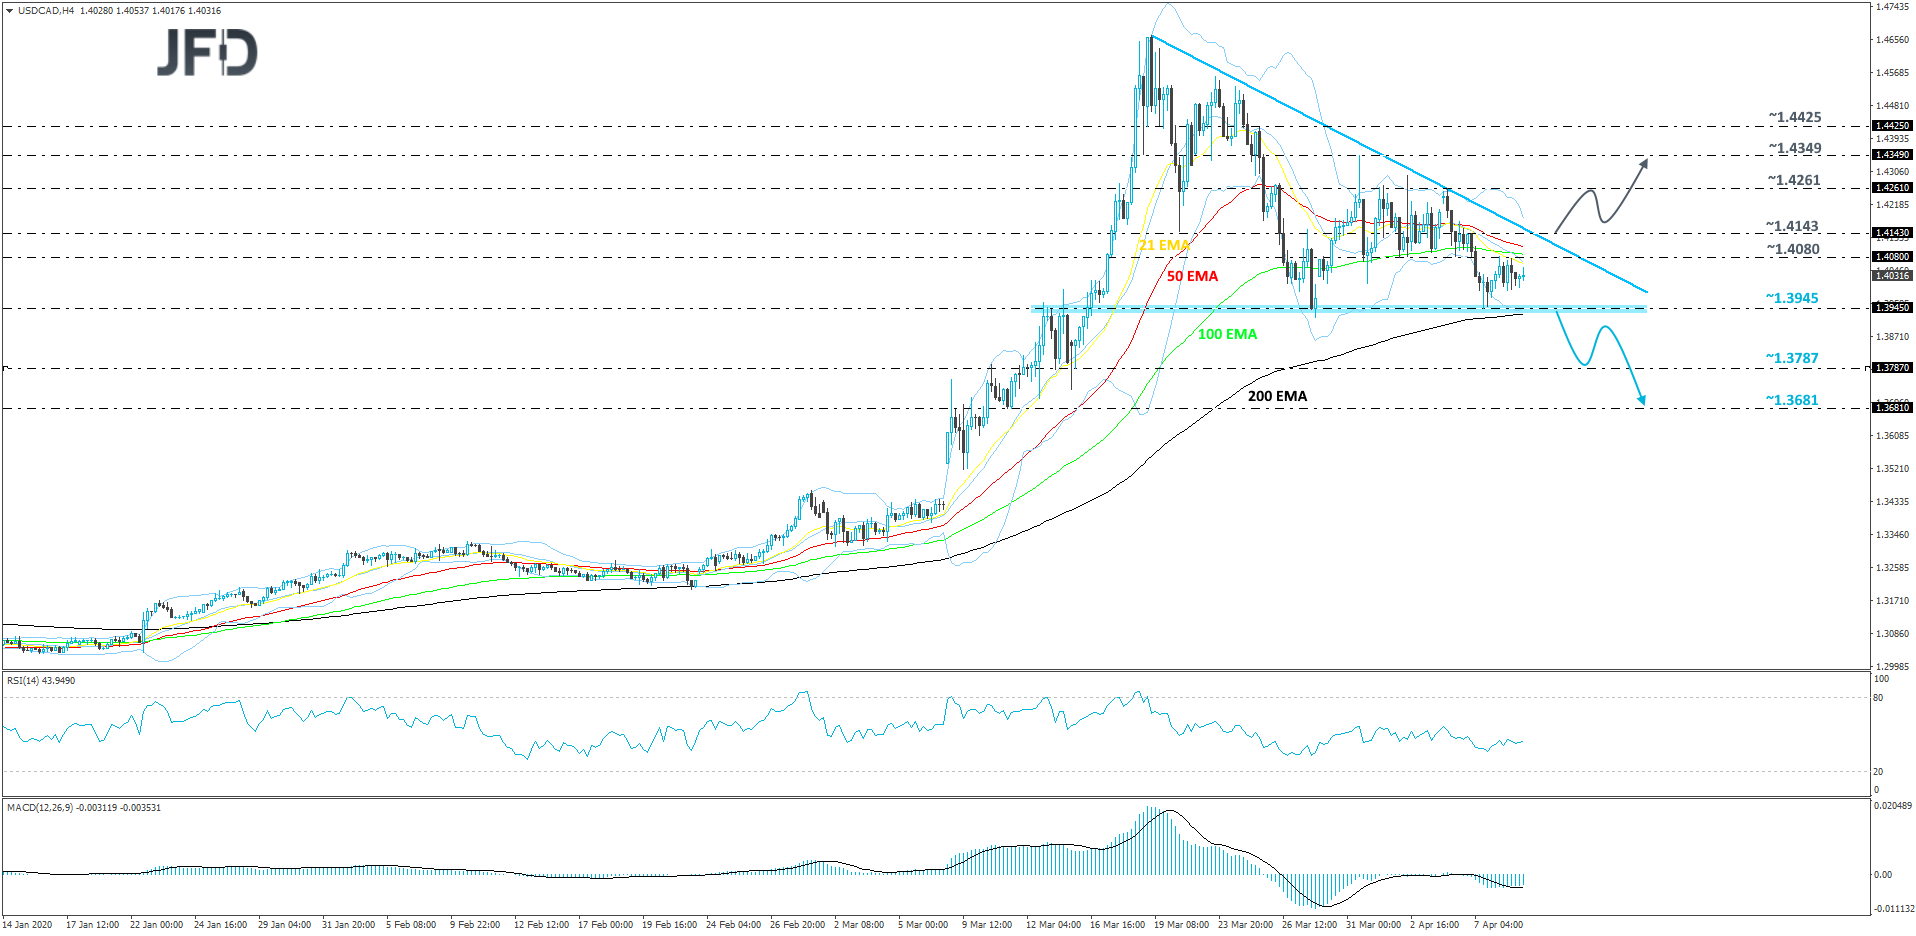 USD/CAD 4-hour chart technical analysis